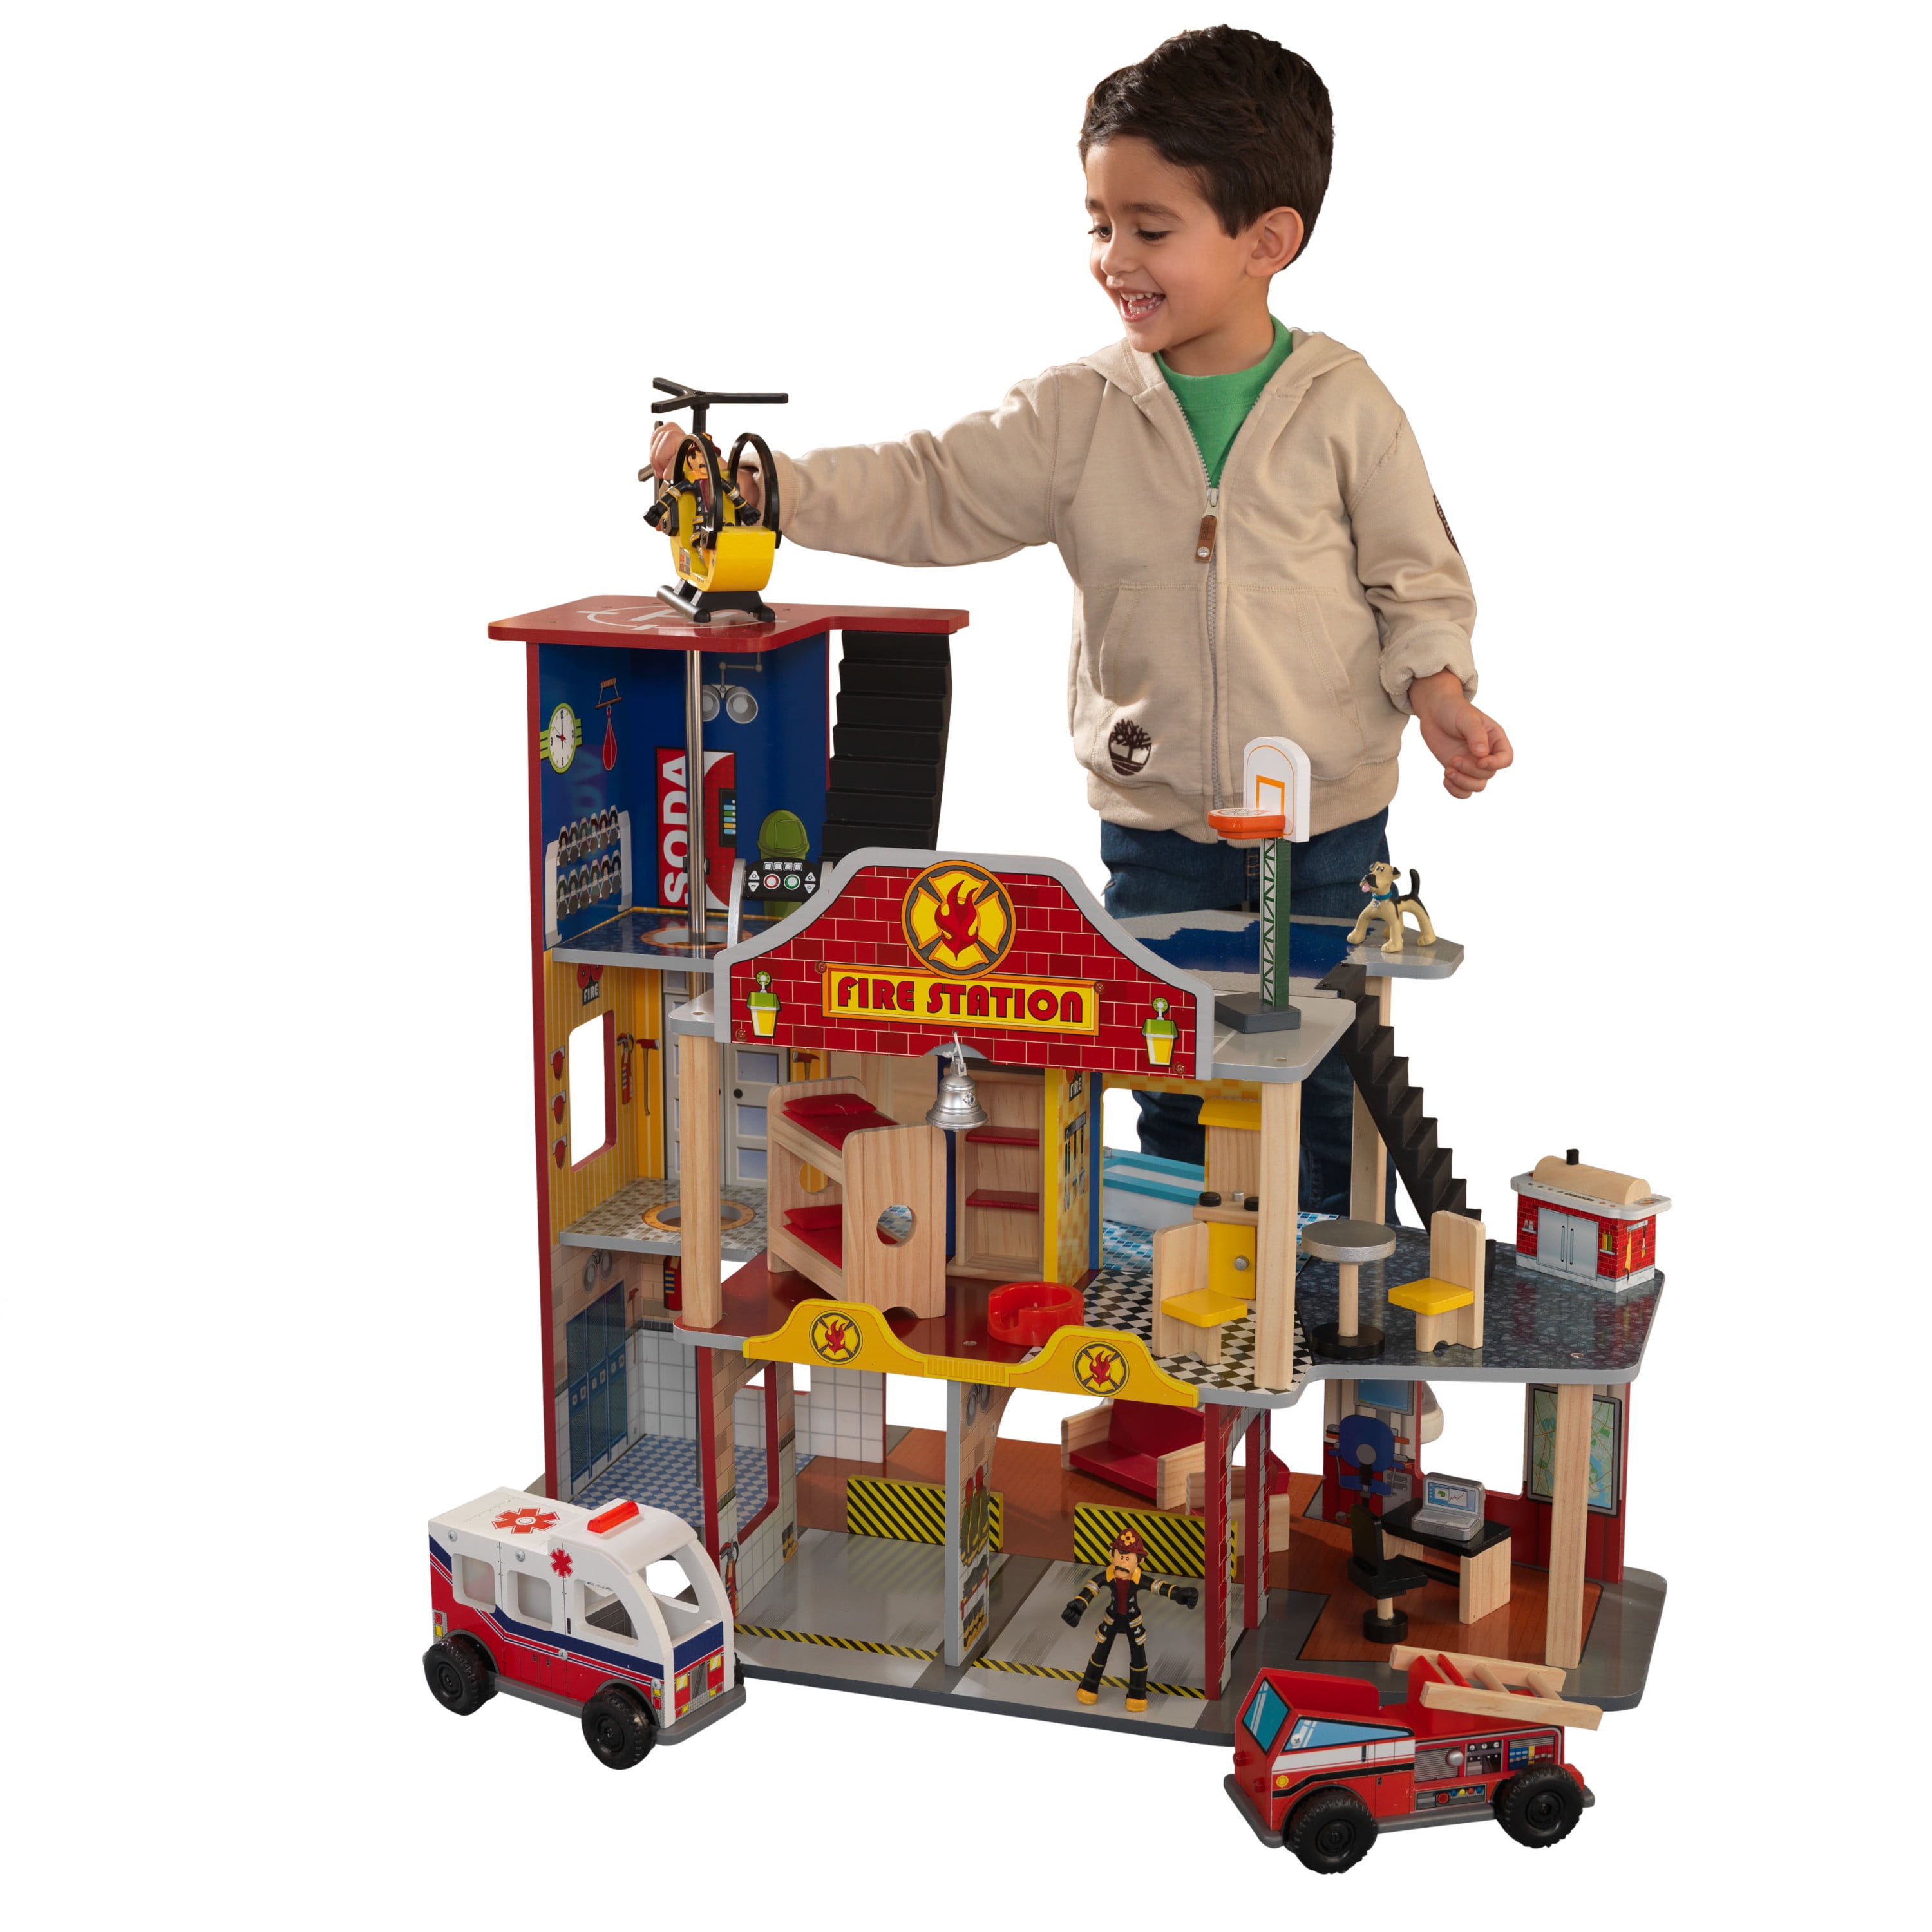 KidKraft Wooden Fire Station Set, 360 Degree Play, Working Garage 